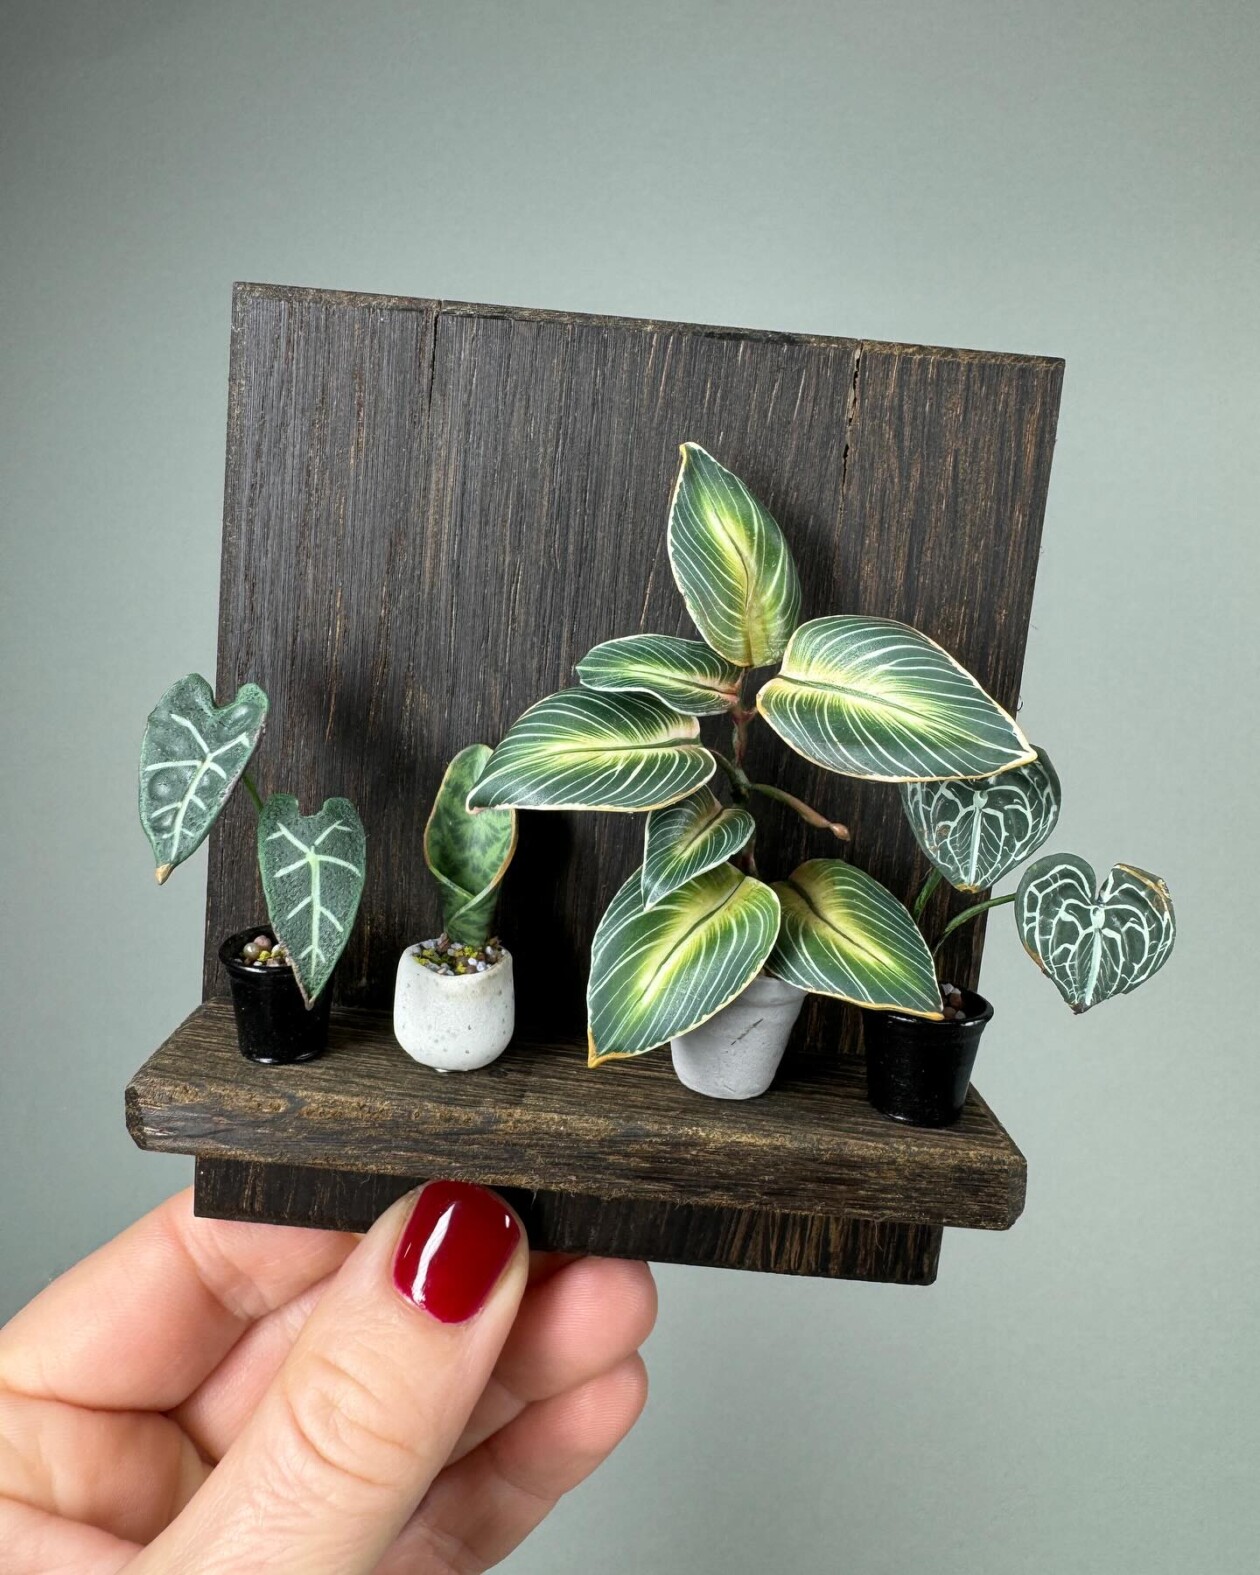 Handmade Miniature Polymer Clay Plants By Astrid Wilk (12)